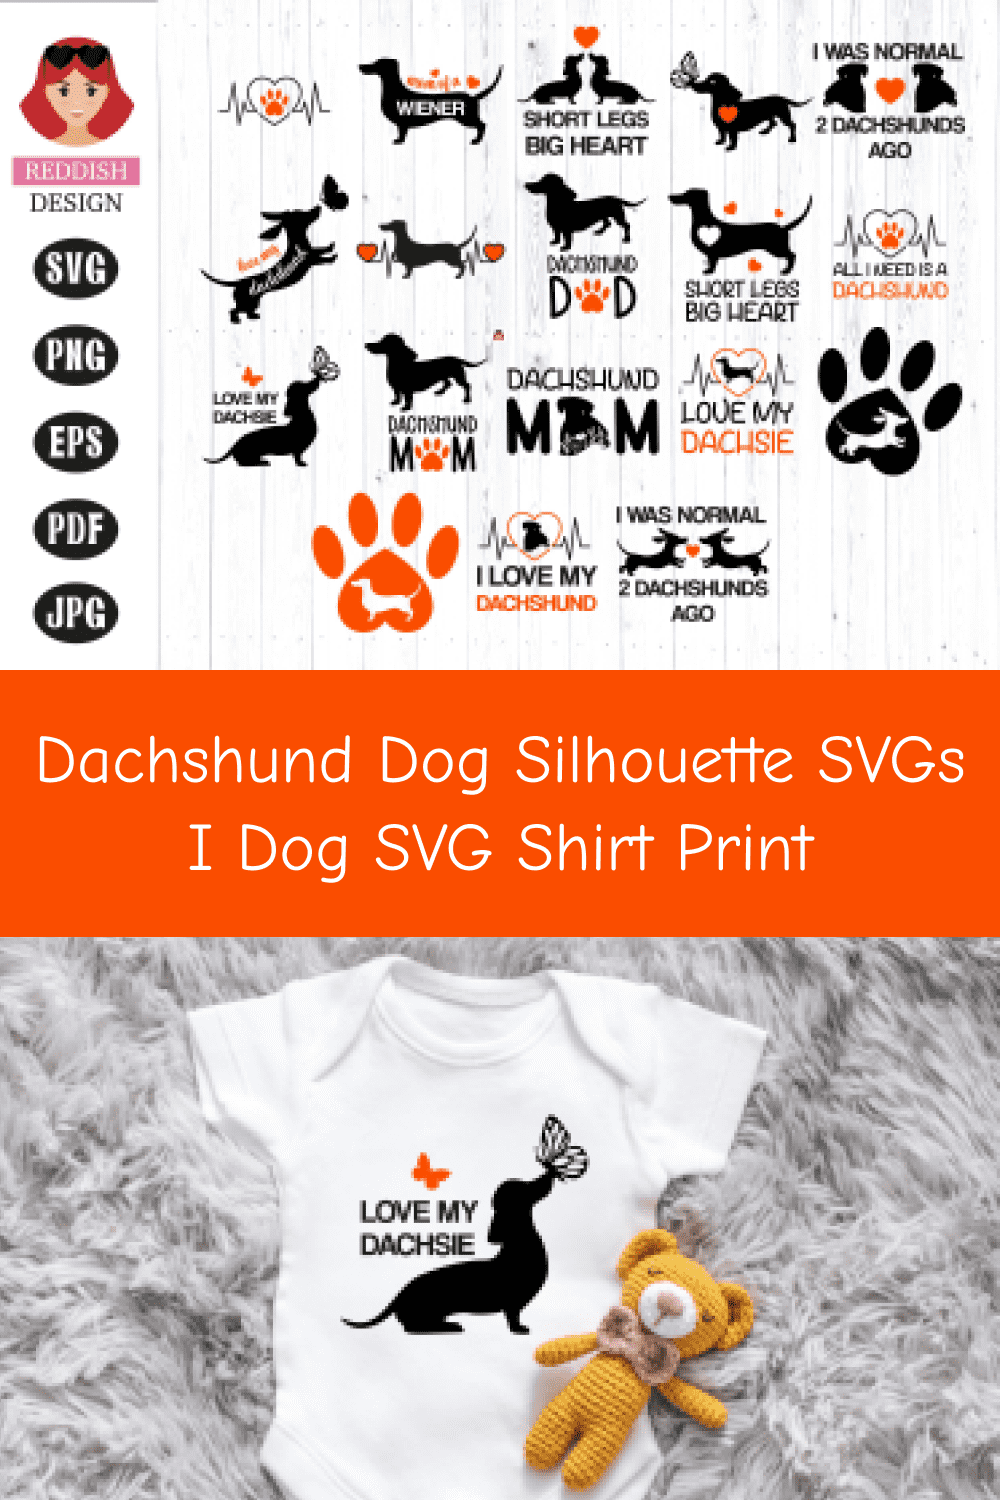 Dachshund Dog Silhouette SVGs I Dog SVG Shirt Print.